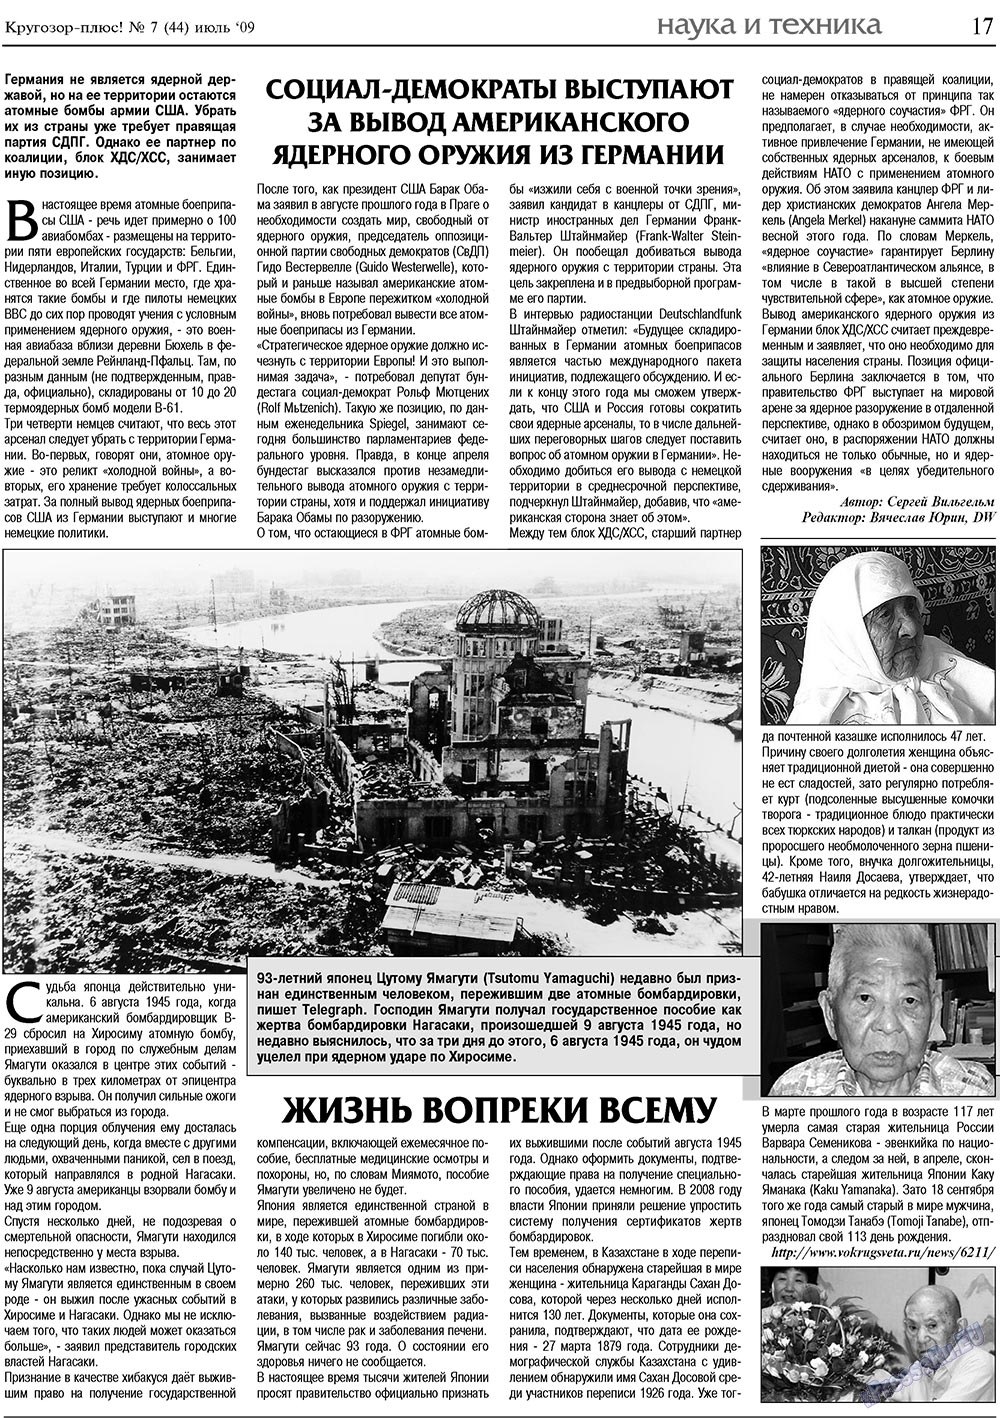 Кругозор плюс! (газета). 2009 год, номер 7, стр. 17